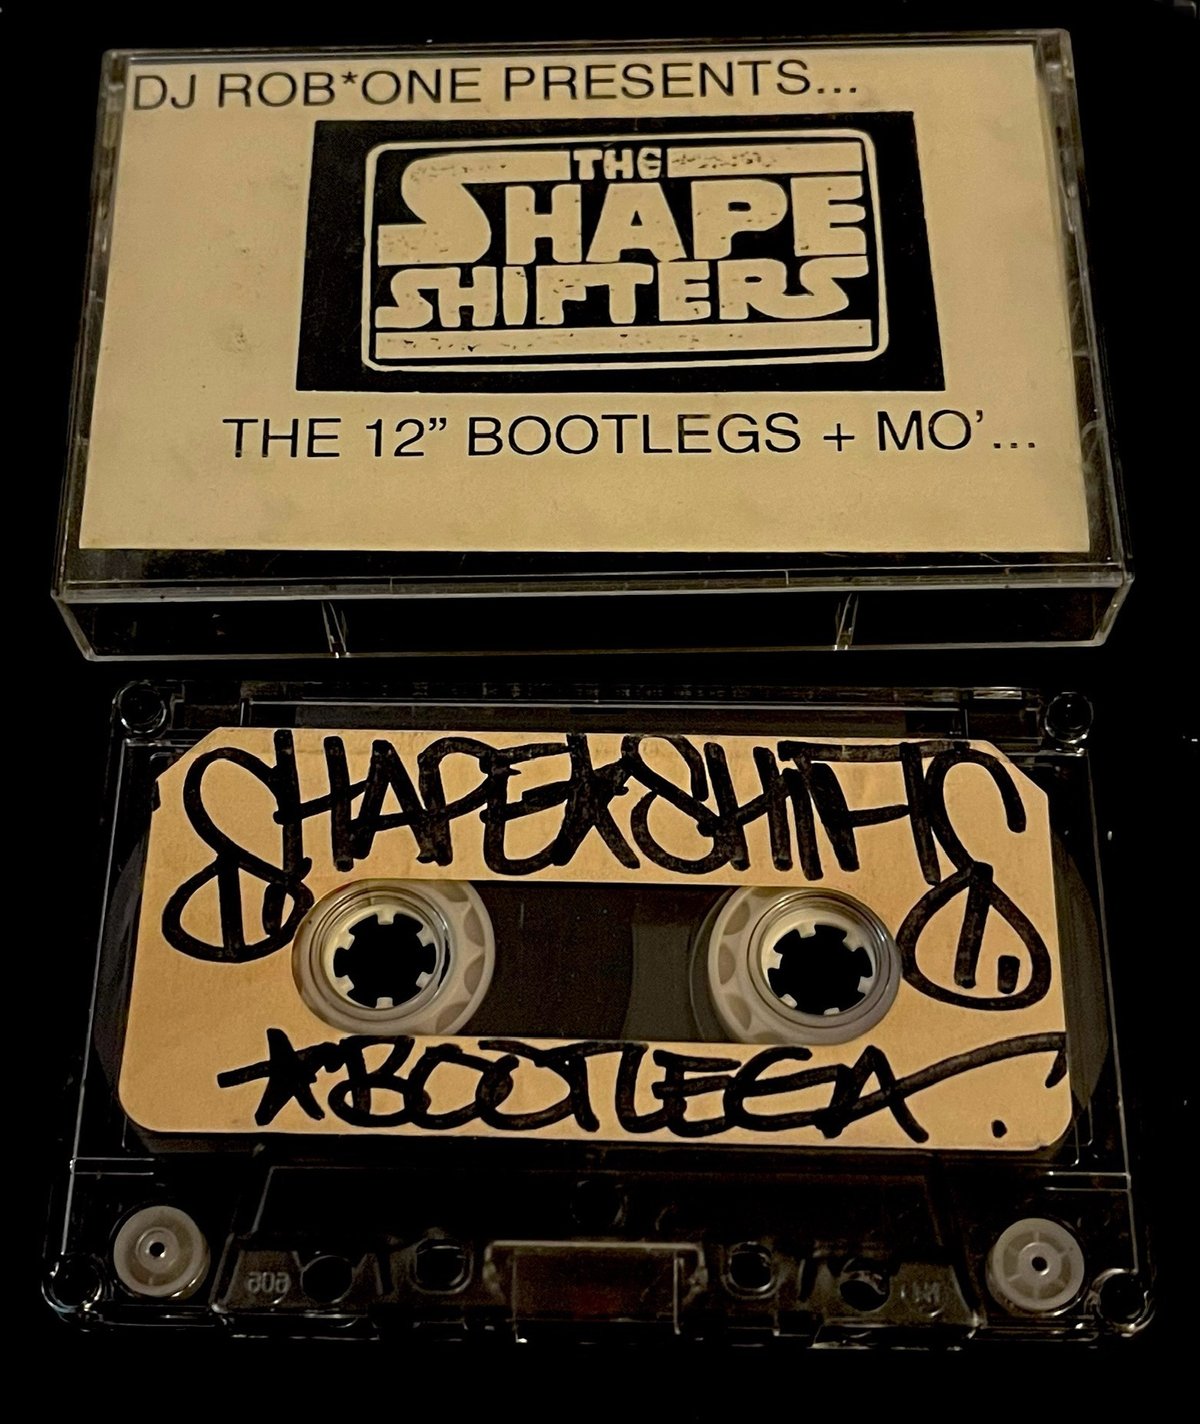 Image of Dj Rob One “ShapeShifters 12” bootlegs” mixtape